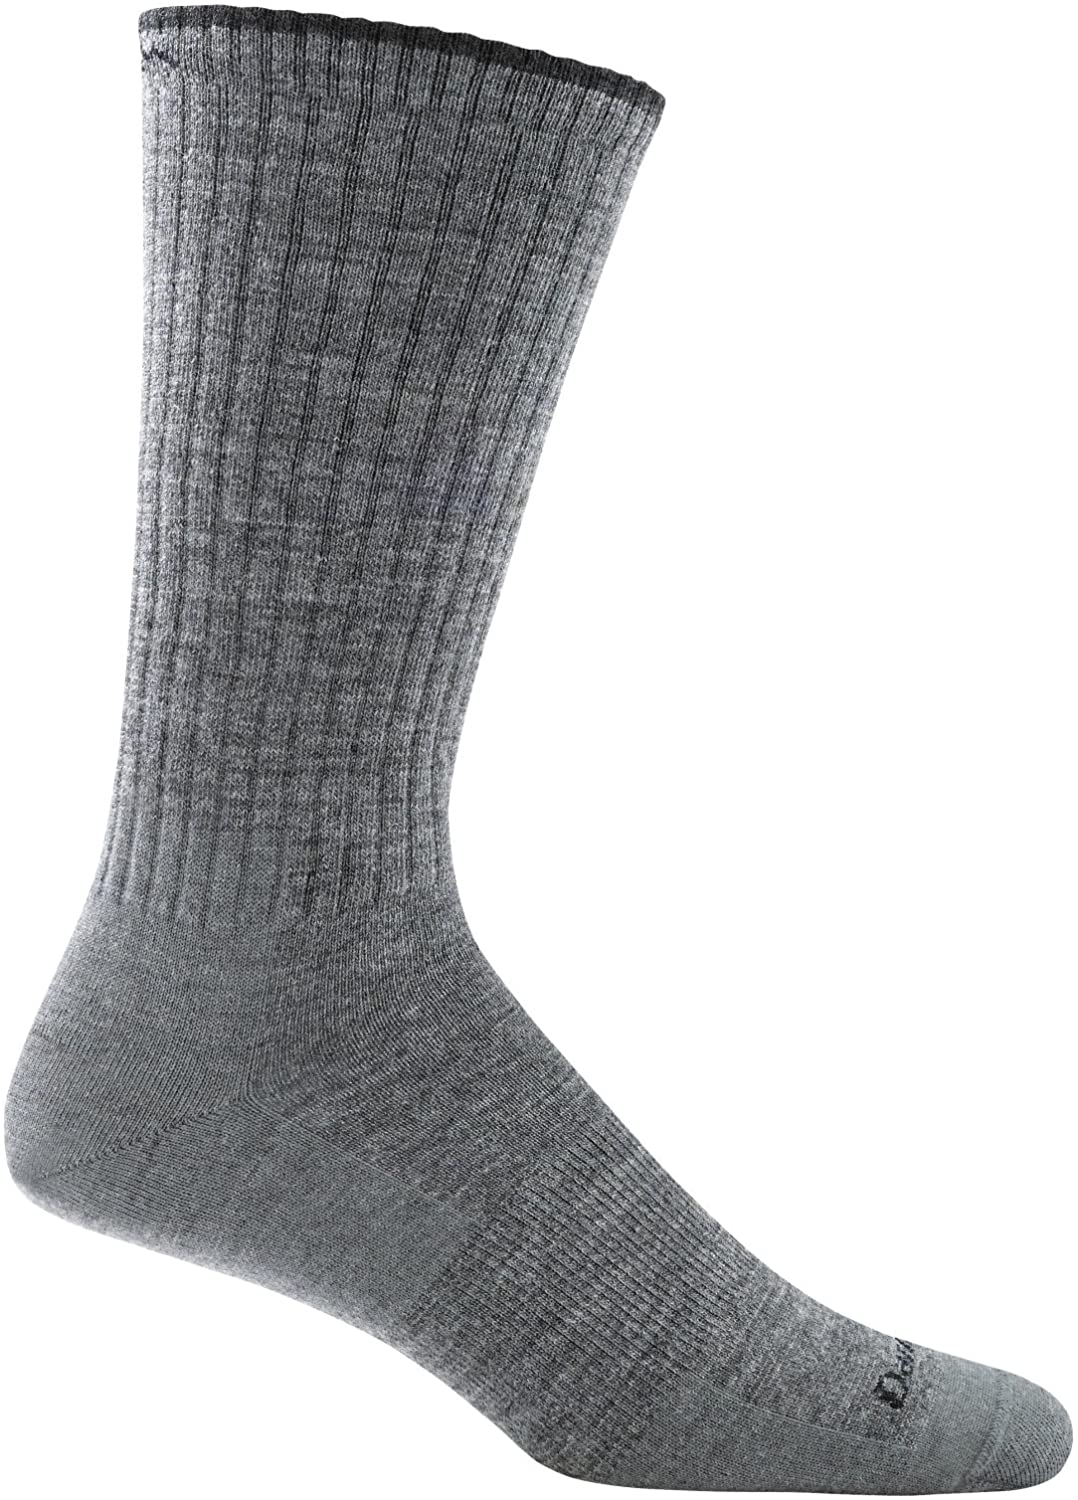 Men's Darn Tough Standard Mid-Calf Lightweight Sock in Medium